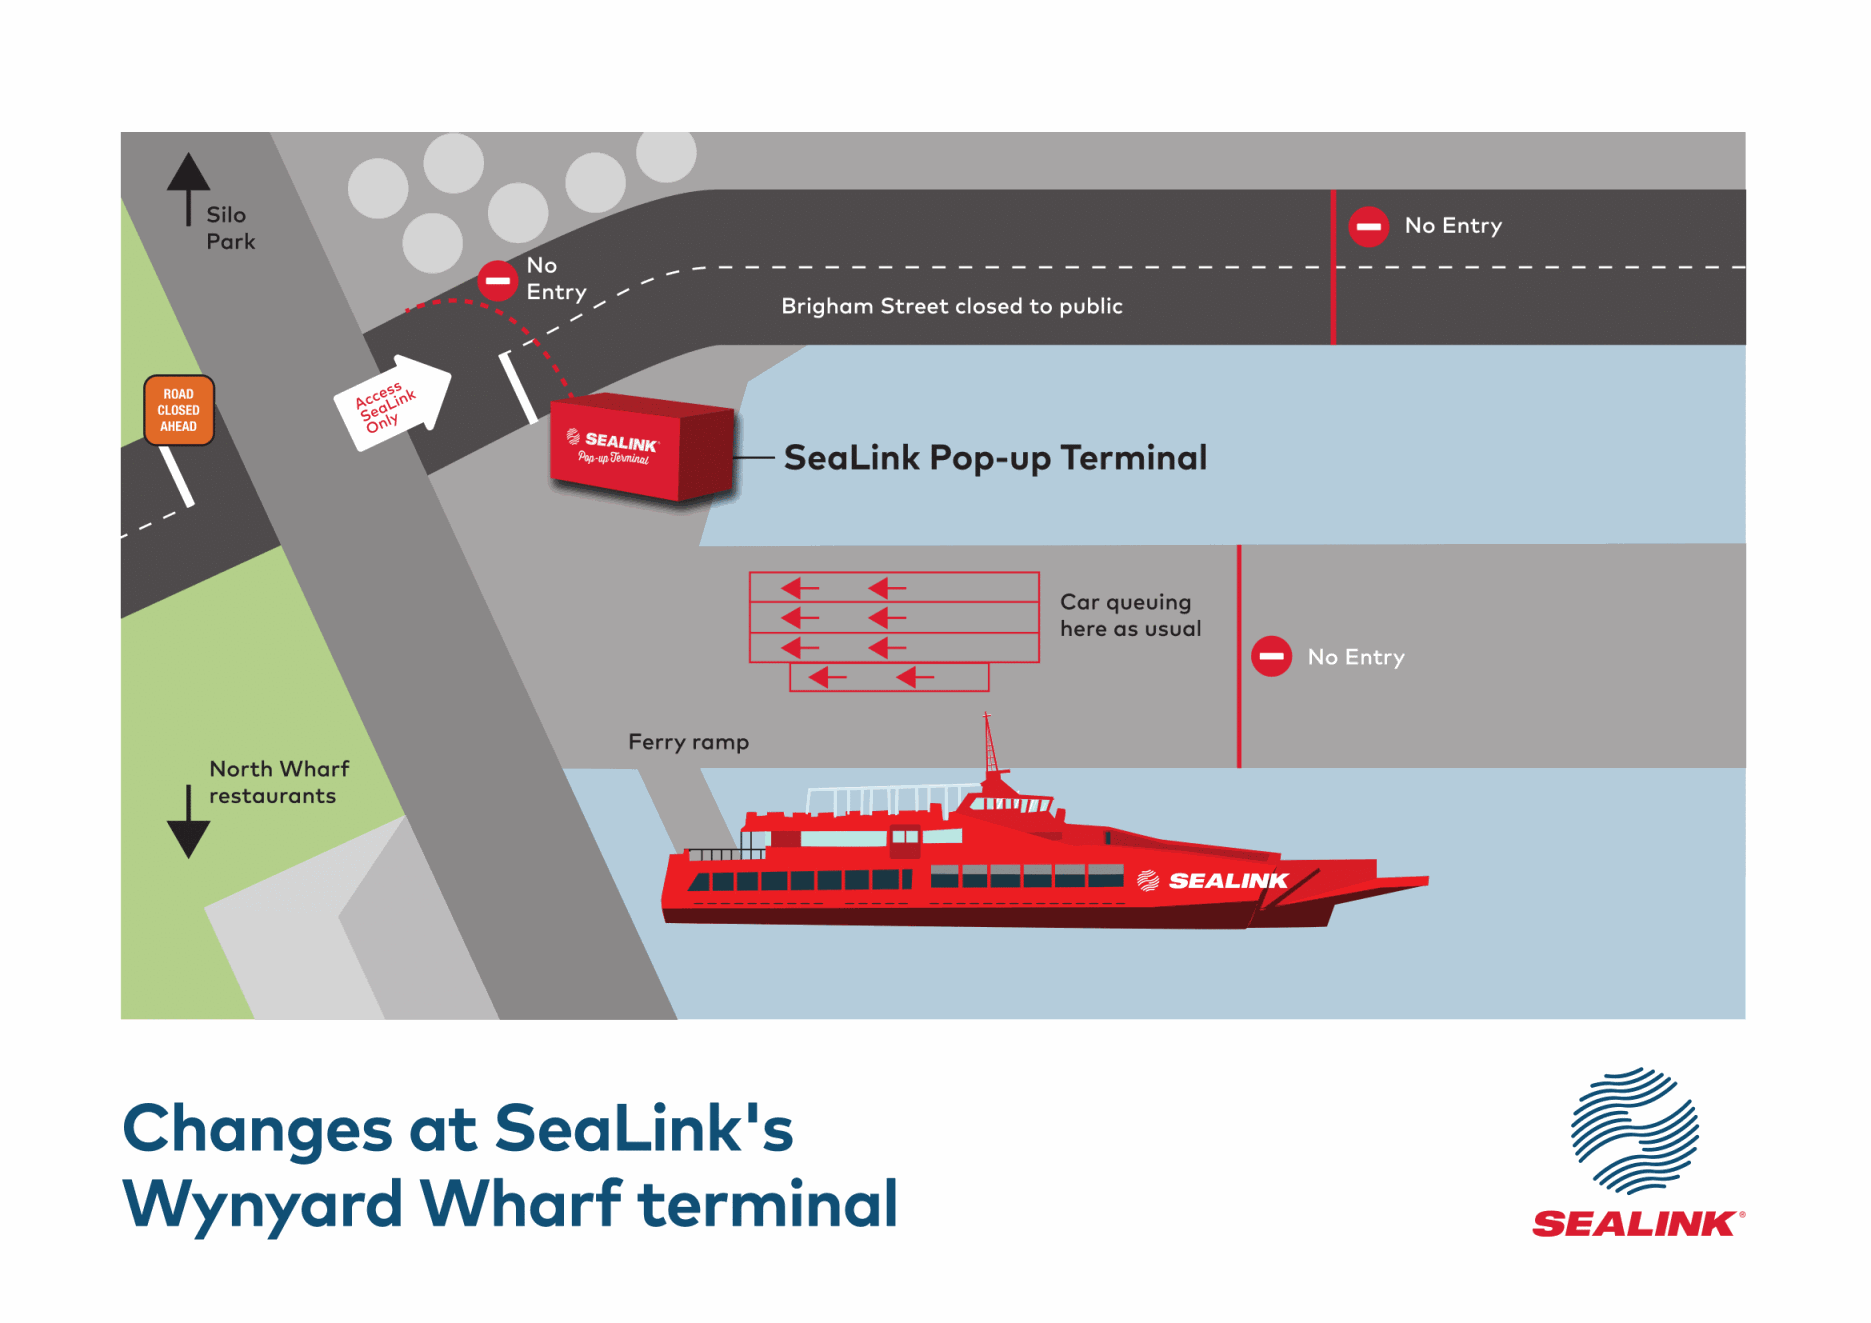 SeaLink Wynyard Wharf terminal road changes